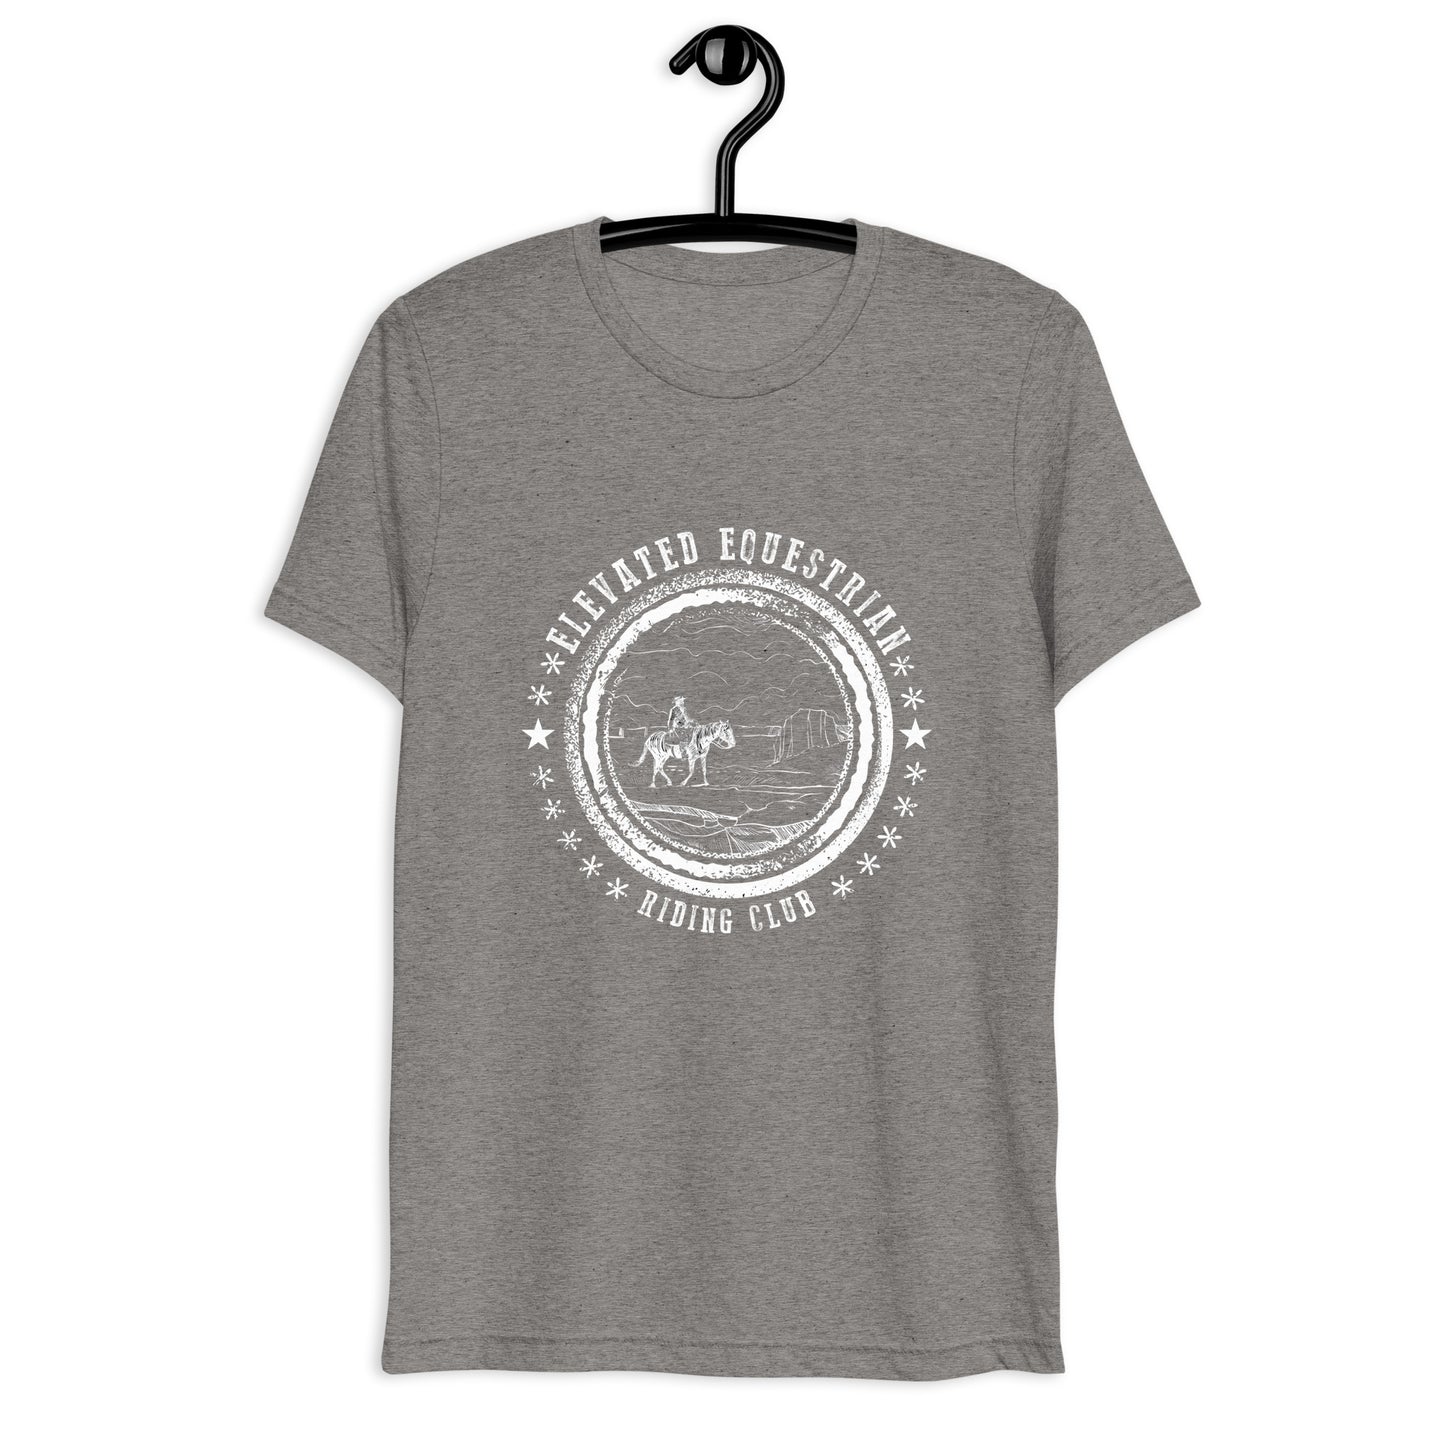 Elevated Equestrian Riding Club Grey Unisex Short Sleeve T-shirt